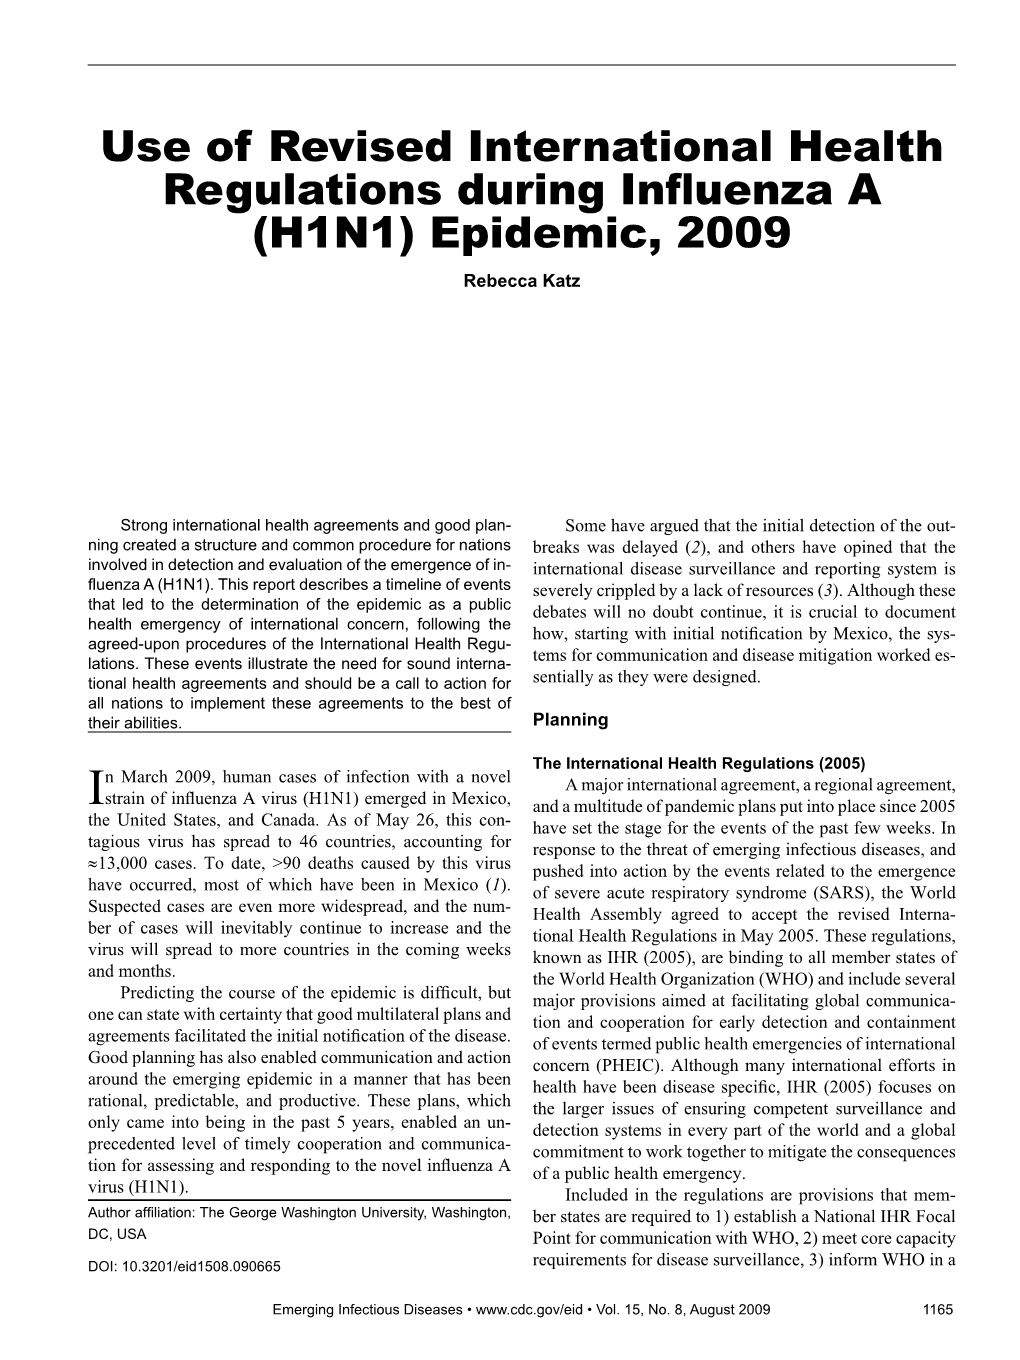 Use of Revised International Health Regulations During Influenza a (H1N1) Epidemic, 2009 Rebecca Katz